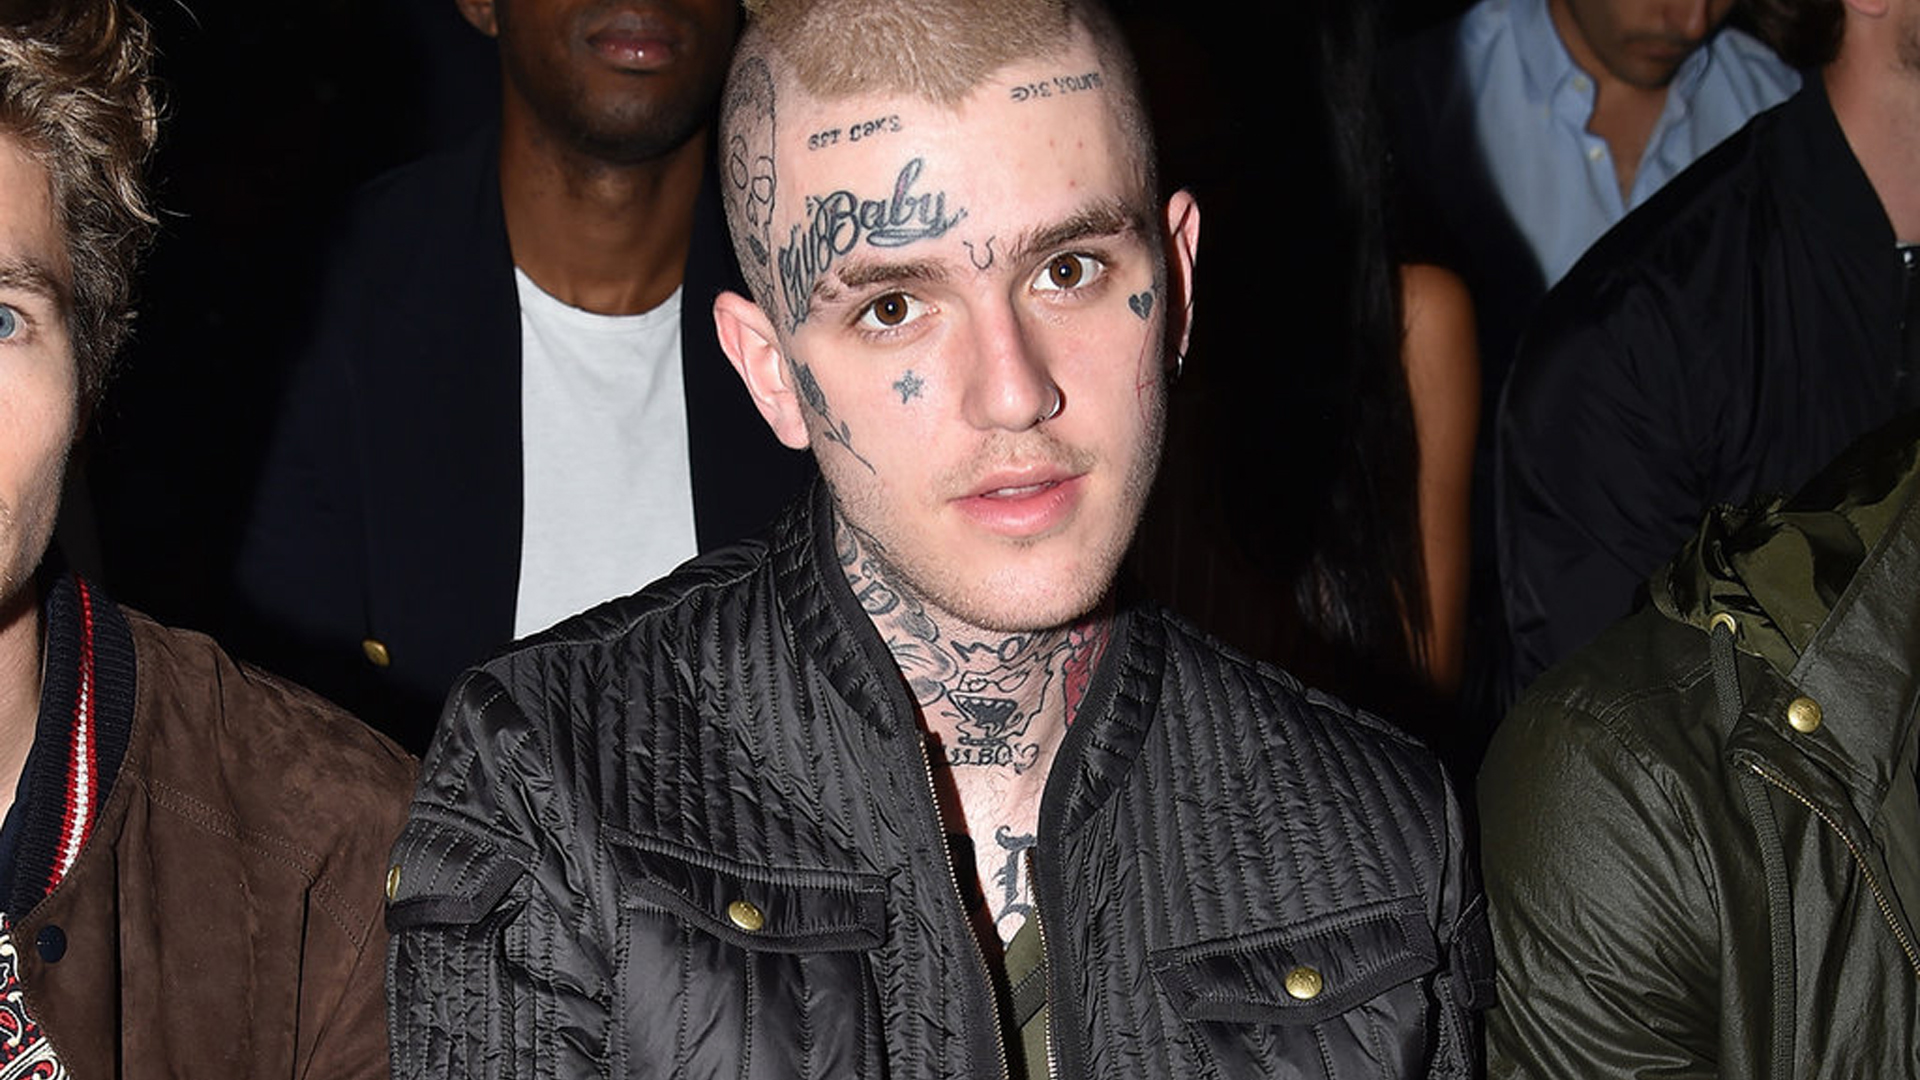 Lil Peep Is Having Tattoos On Face And Neck Wearing Black Jacket 2K Lil Peep